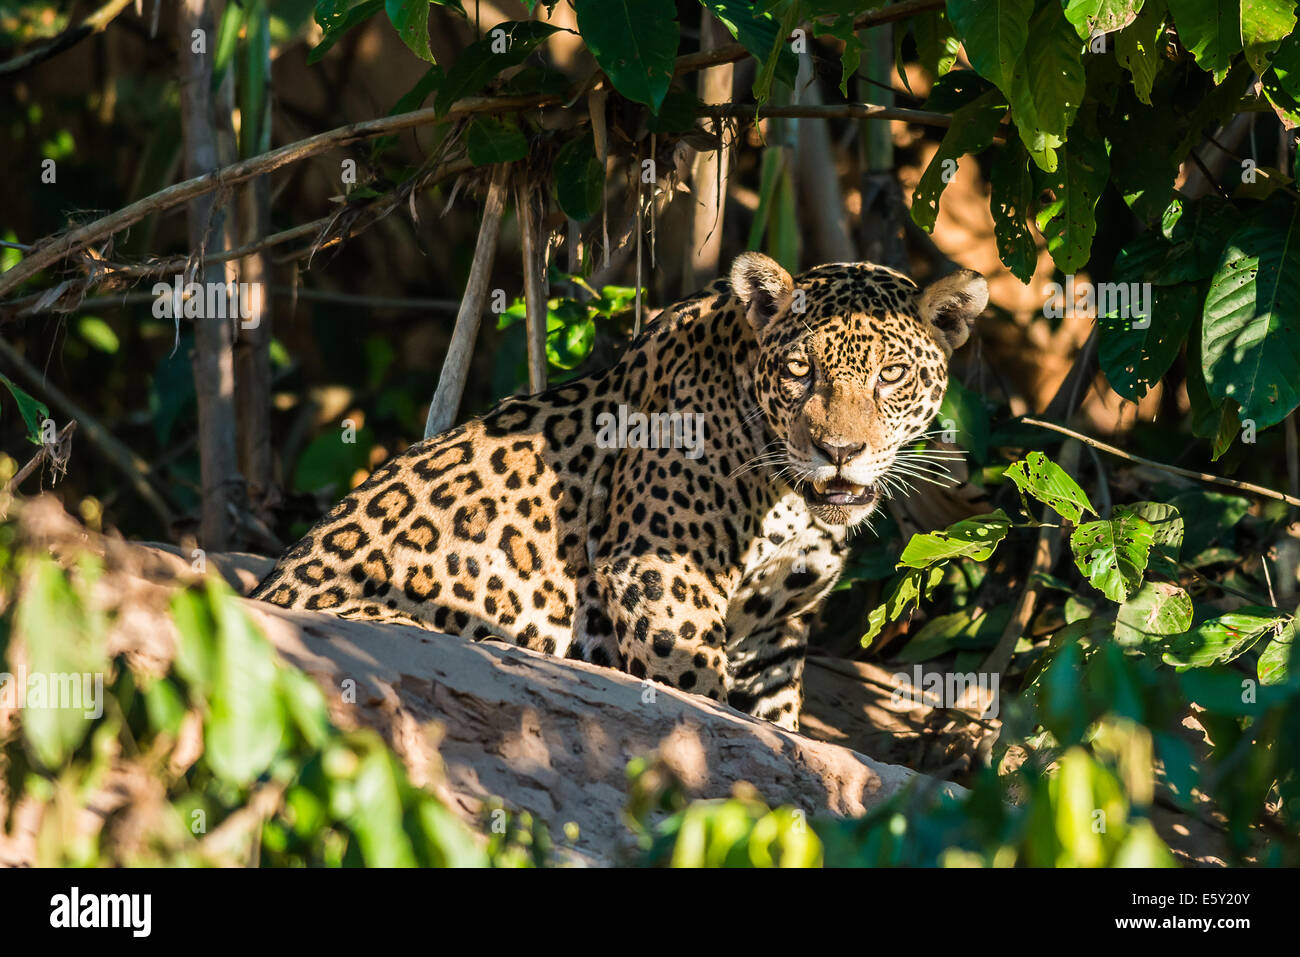 Jaguar amazon -Fotos und -Bildmaterial in hoher Auflösung – Alamy